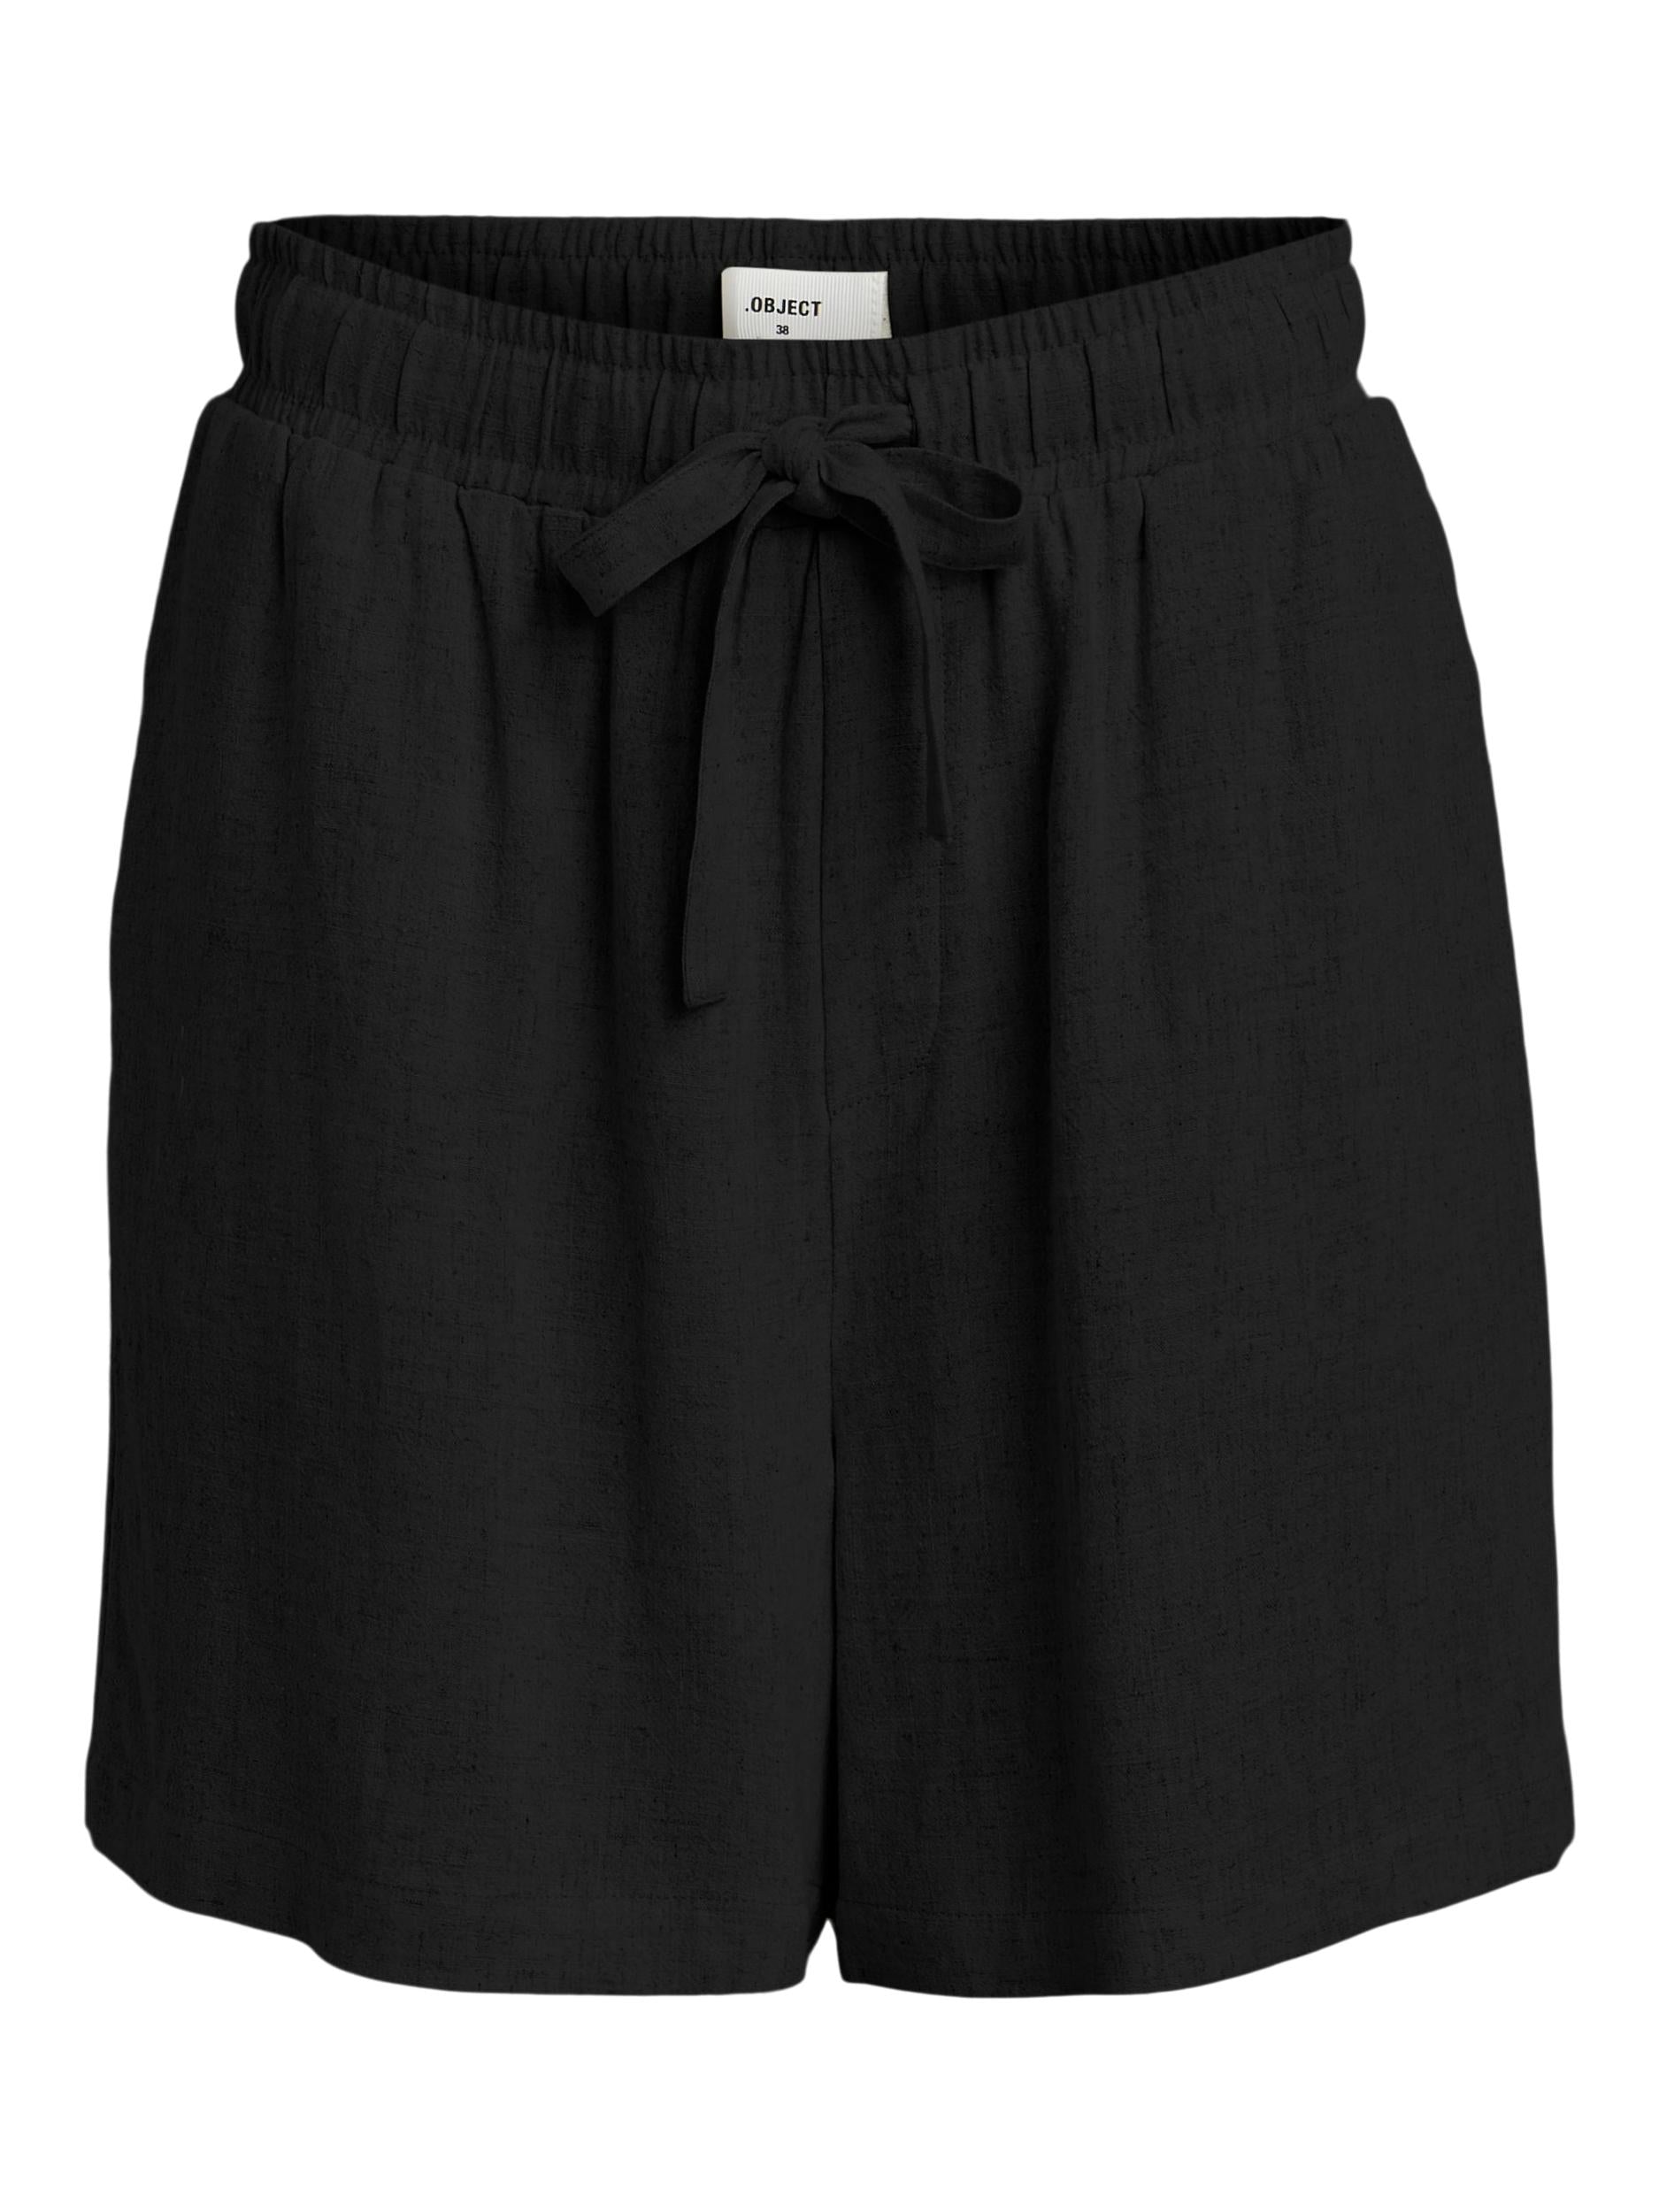 Object Sanne Shorts, Black